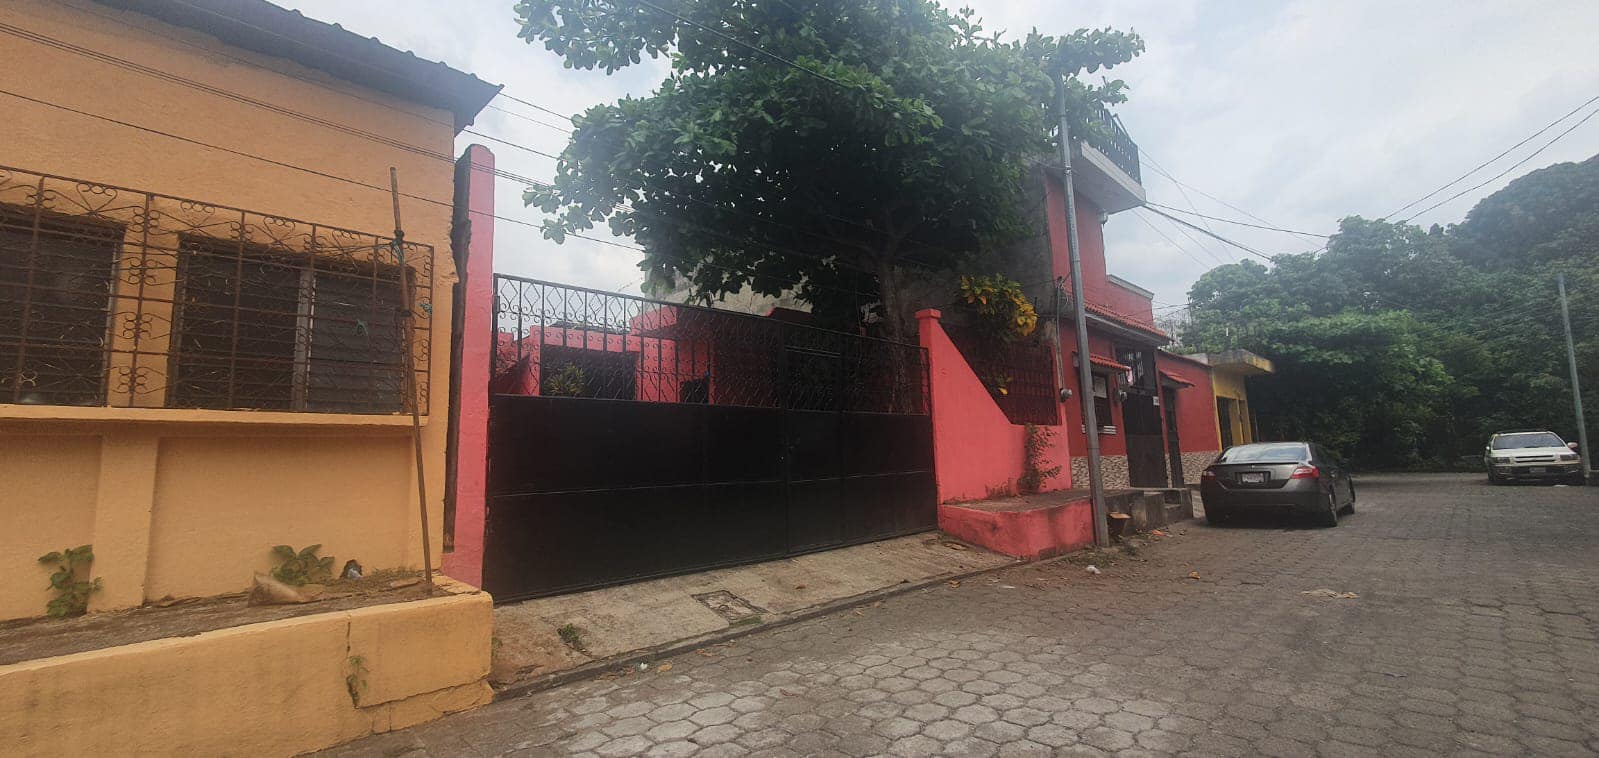 Se vende casa en Retalhuleu, Guatemala 
3 recamaras 
2 baños 
sala de comedor
ár